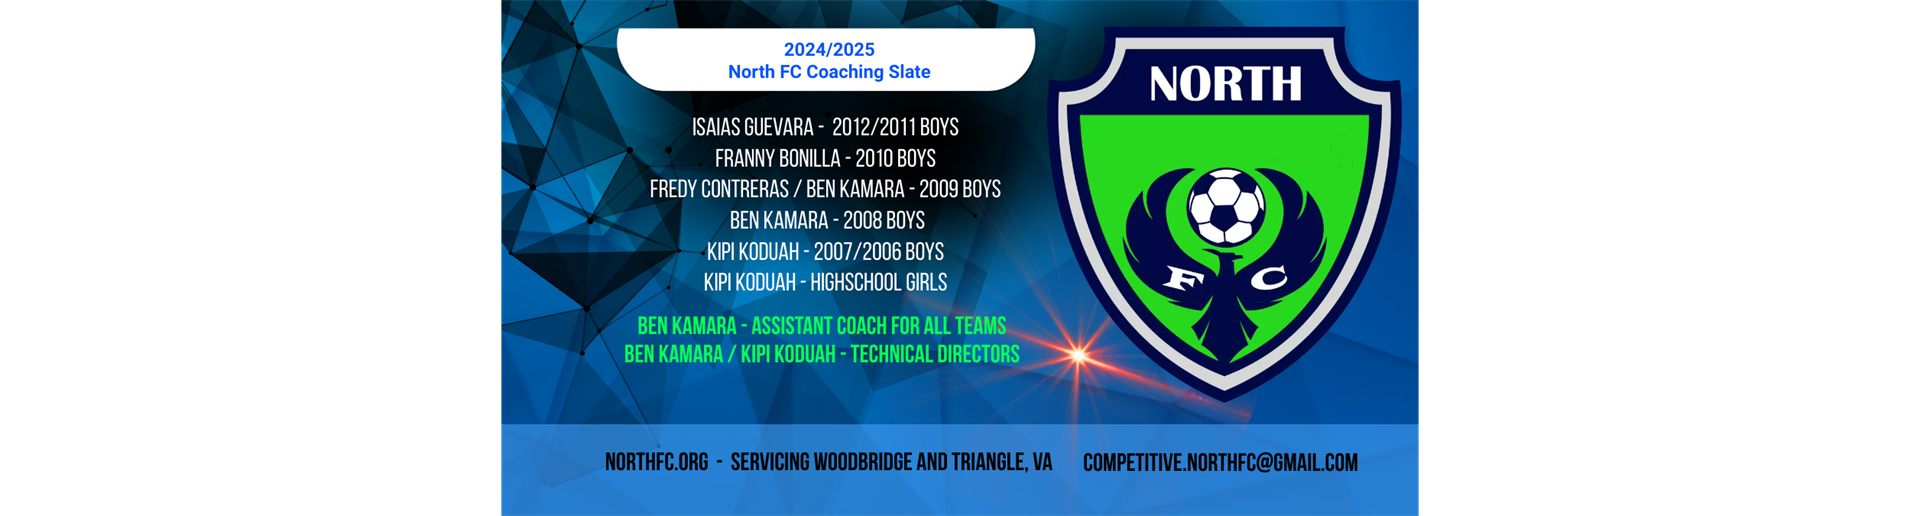 2024-2025 North FC Coaching Slate